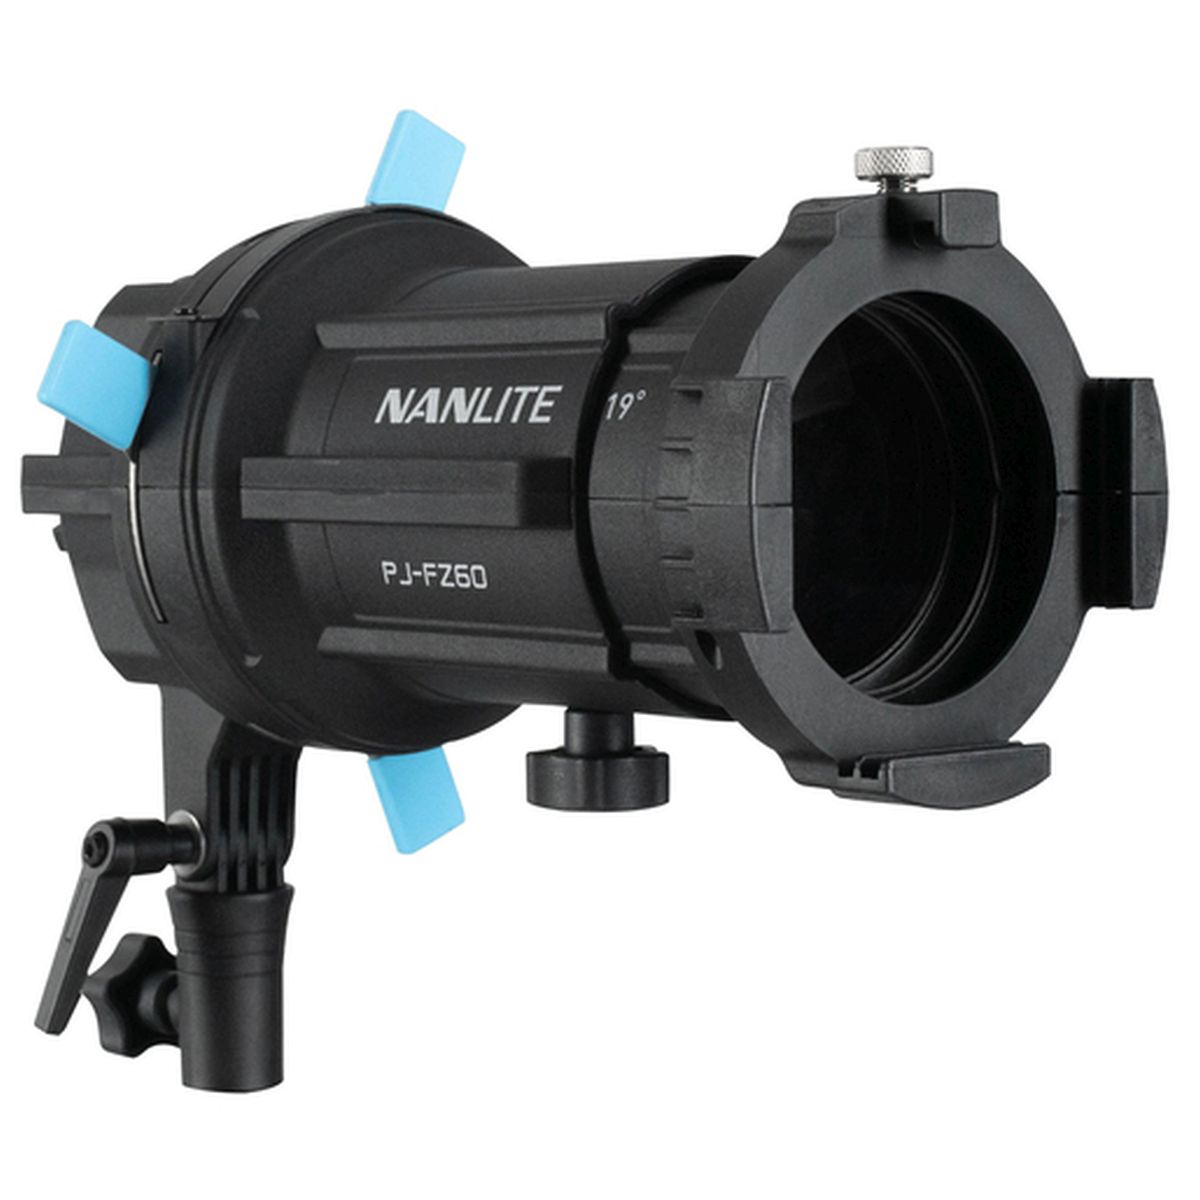 Nanlite PJ-FMM-19 Projektionsvorsatz (Forza 60/150)